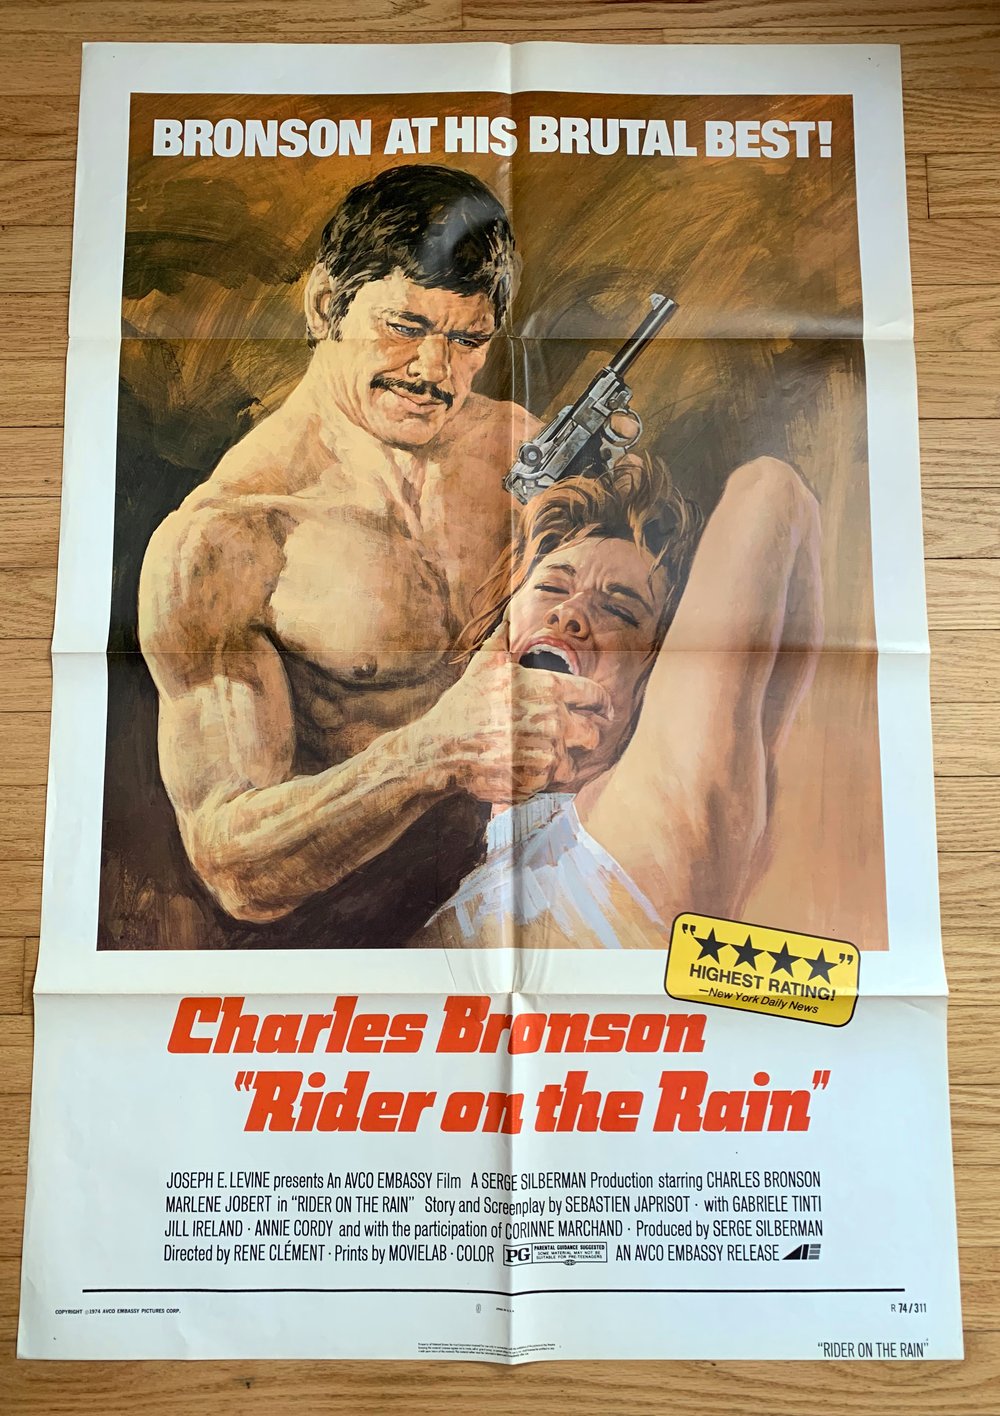 1970 RIDER ON THE RAIN Original U.S. One Sheet Movie Poster